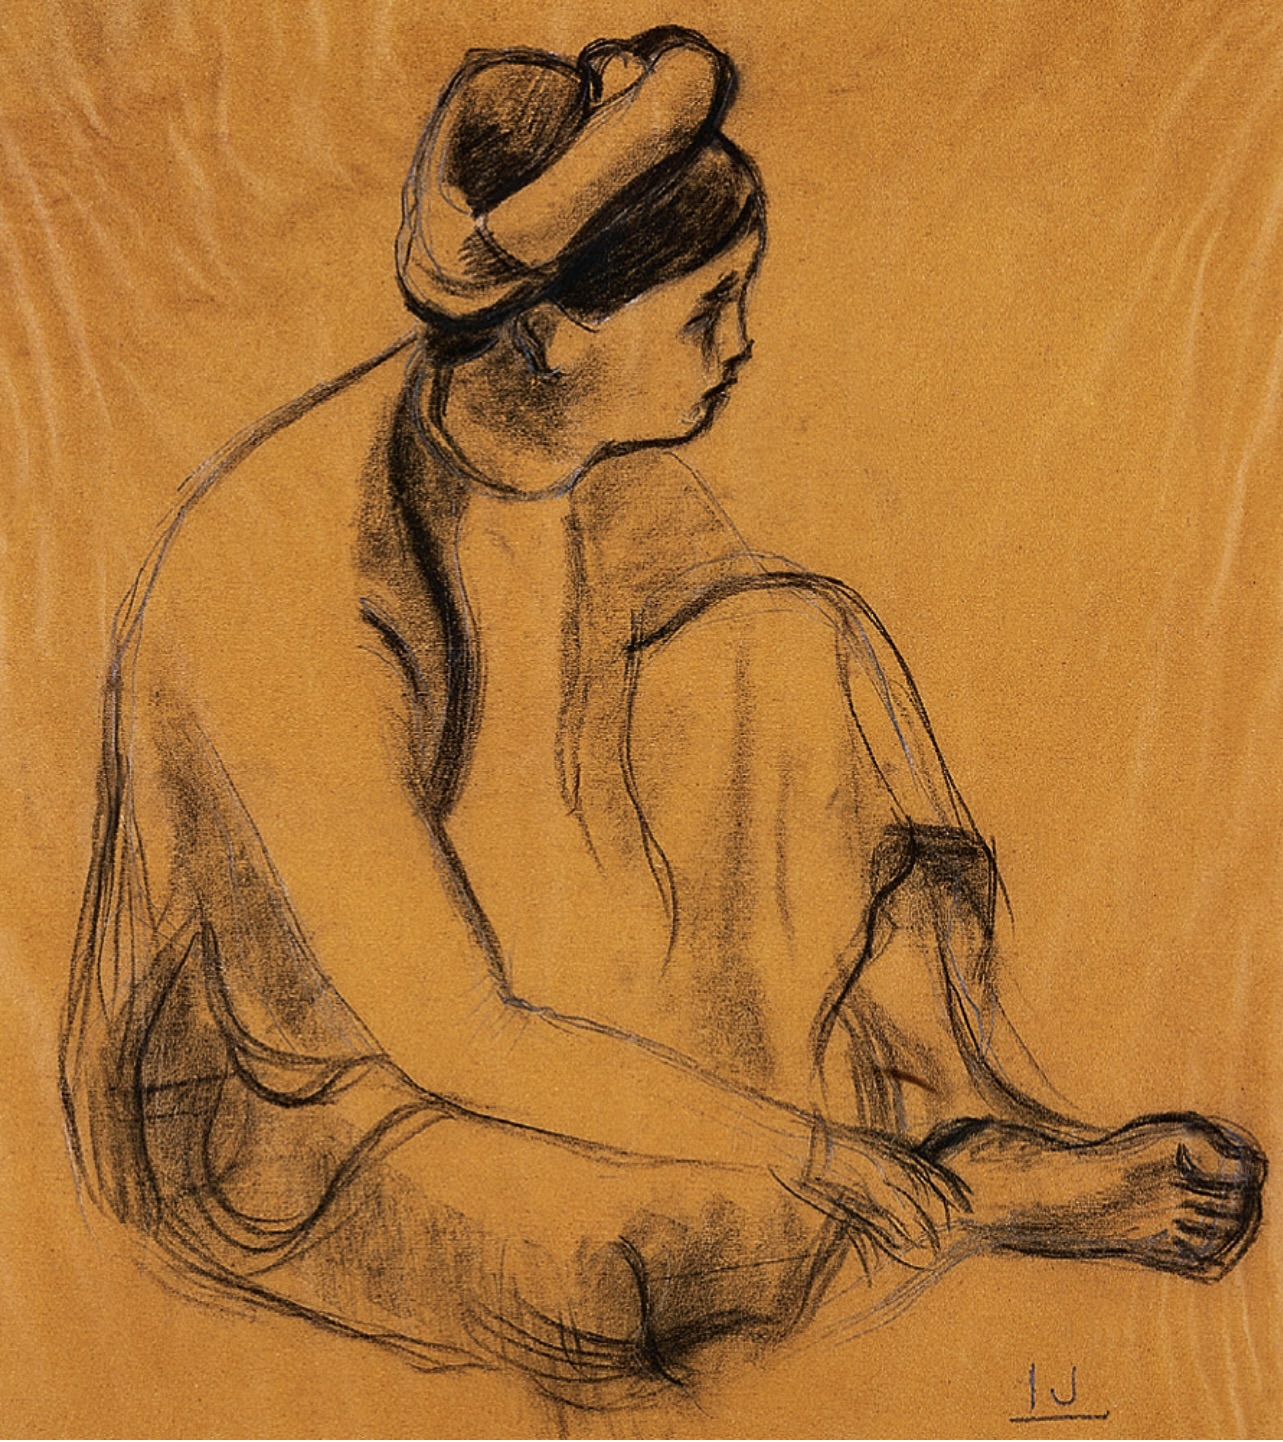 Inguimberty, 1935–38, charcoal on paper, 31 x 26cm